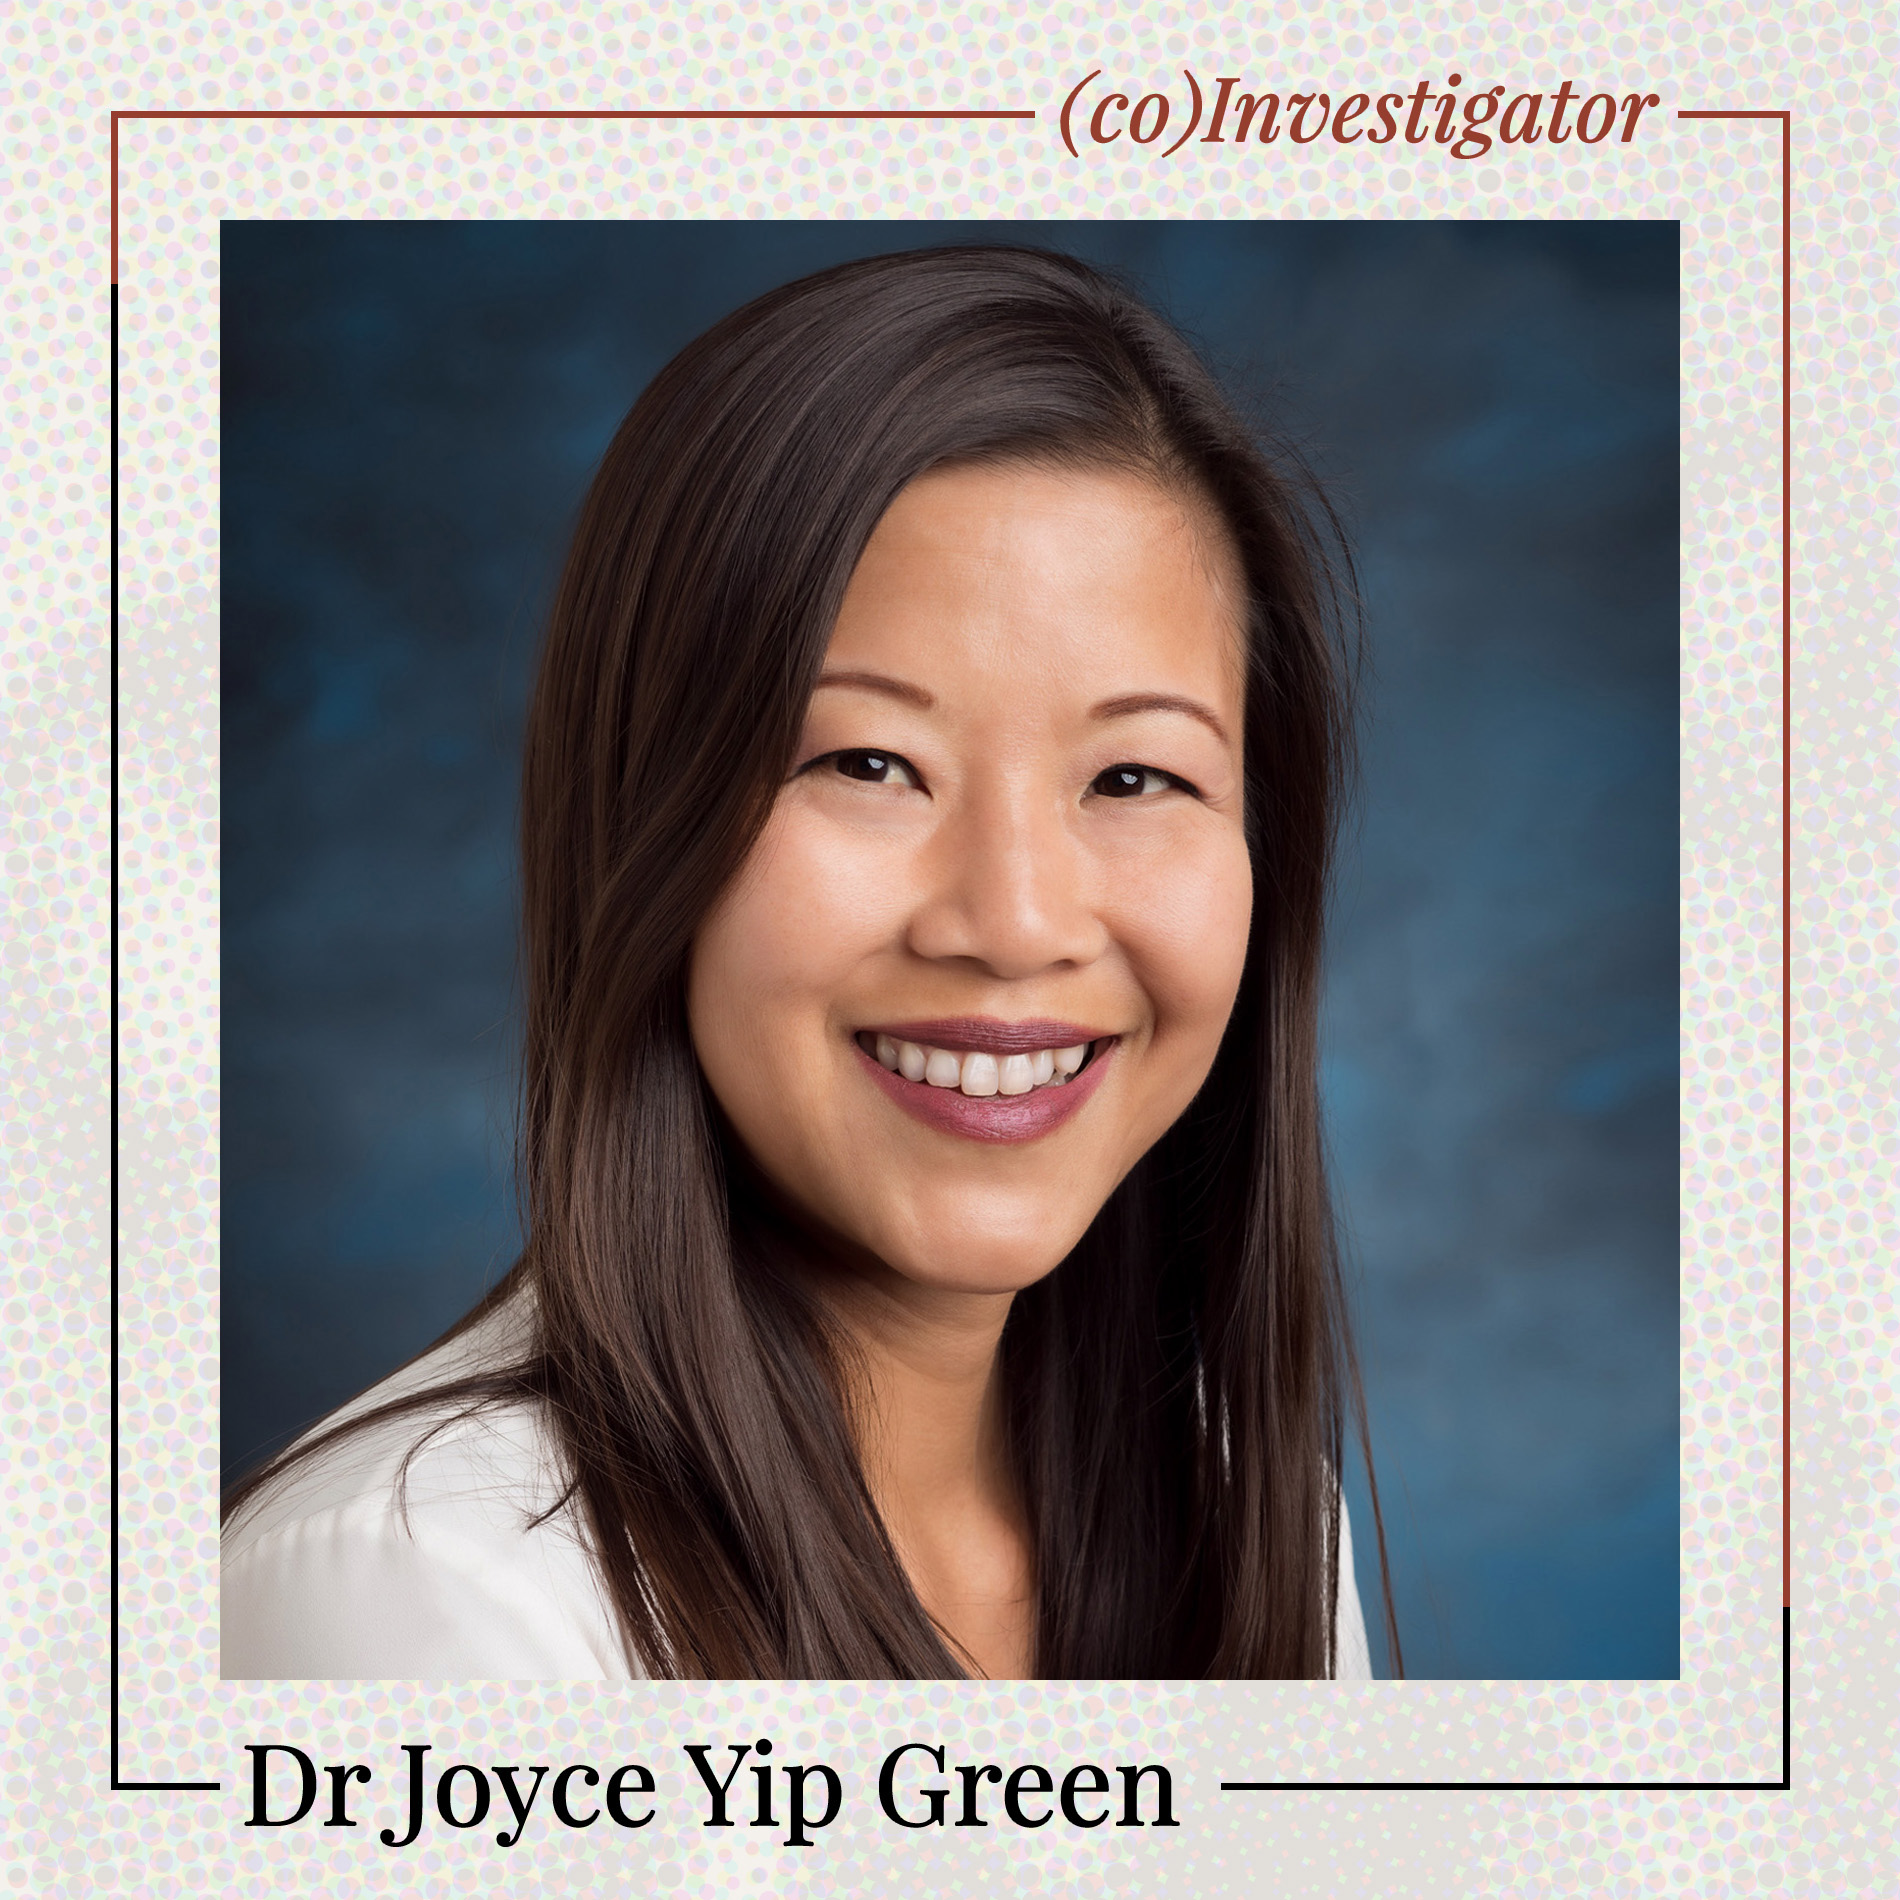 Dr. Joyce Yip Green